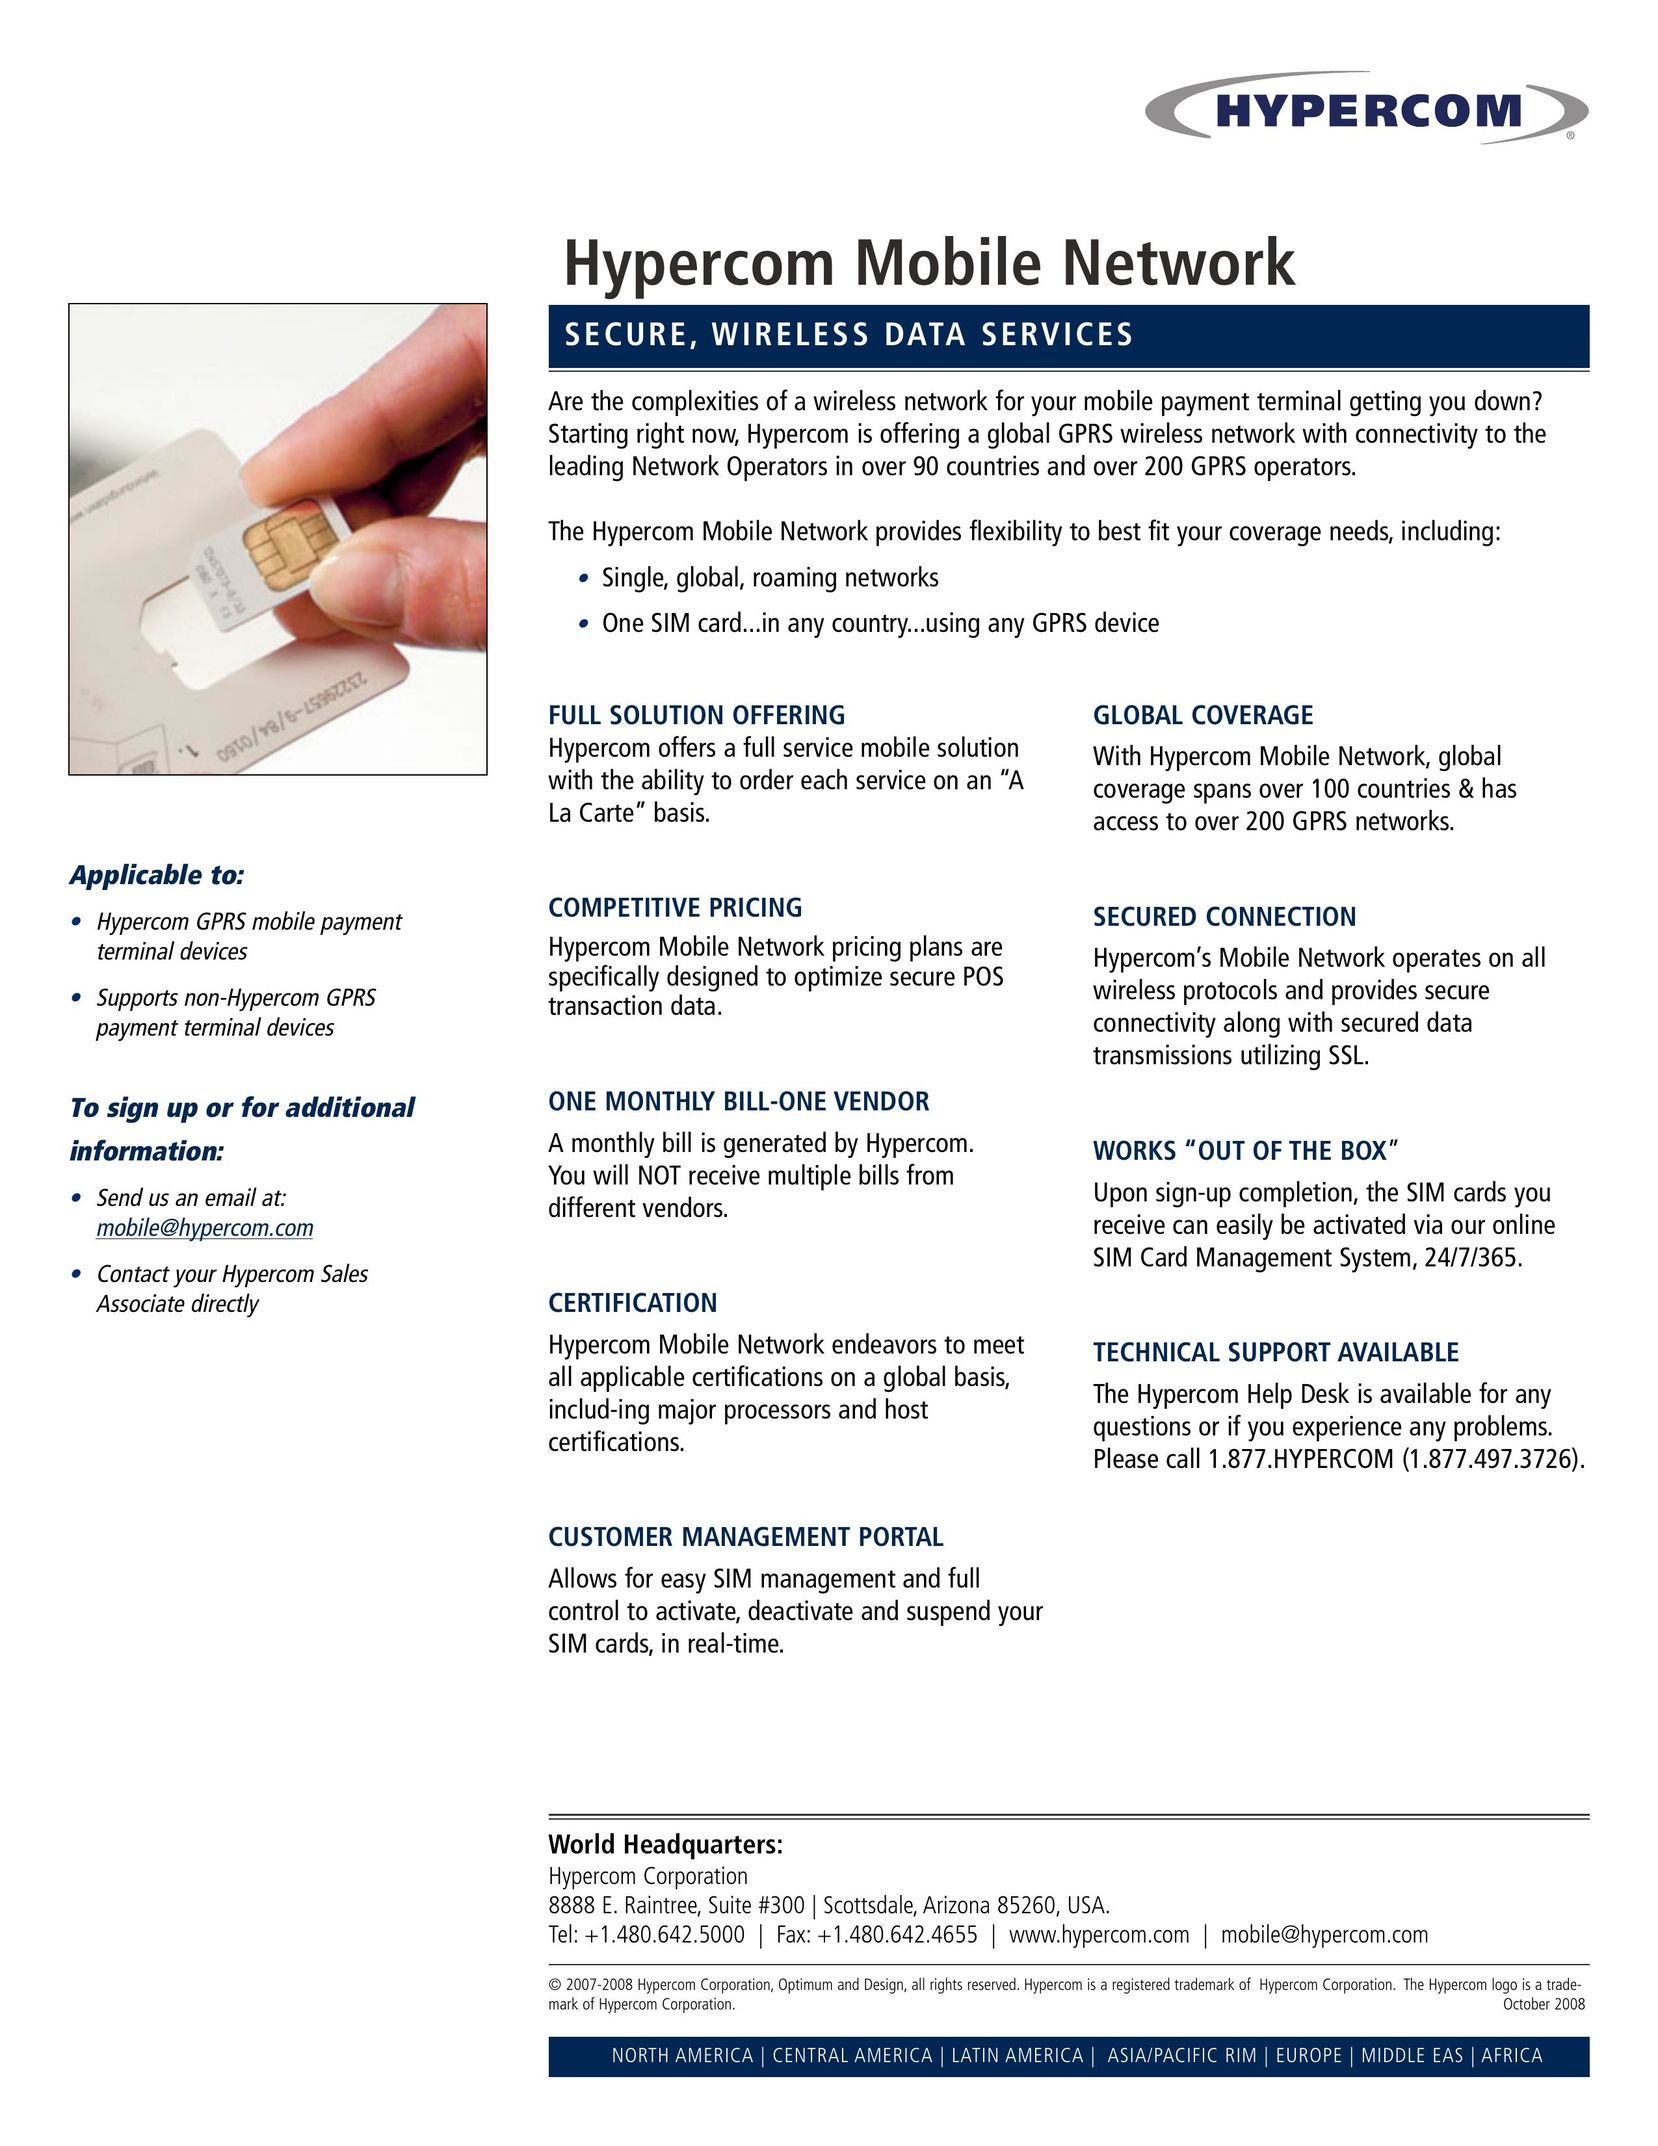 Hypercom Mobile Network Network Card User Manual